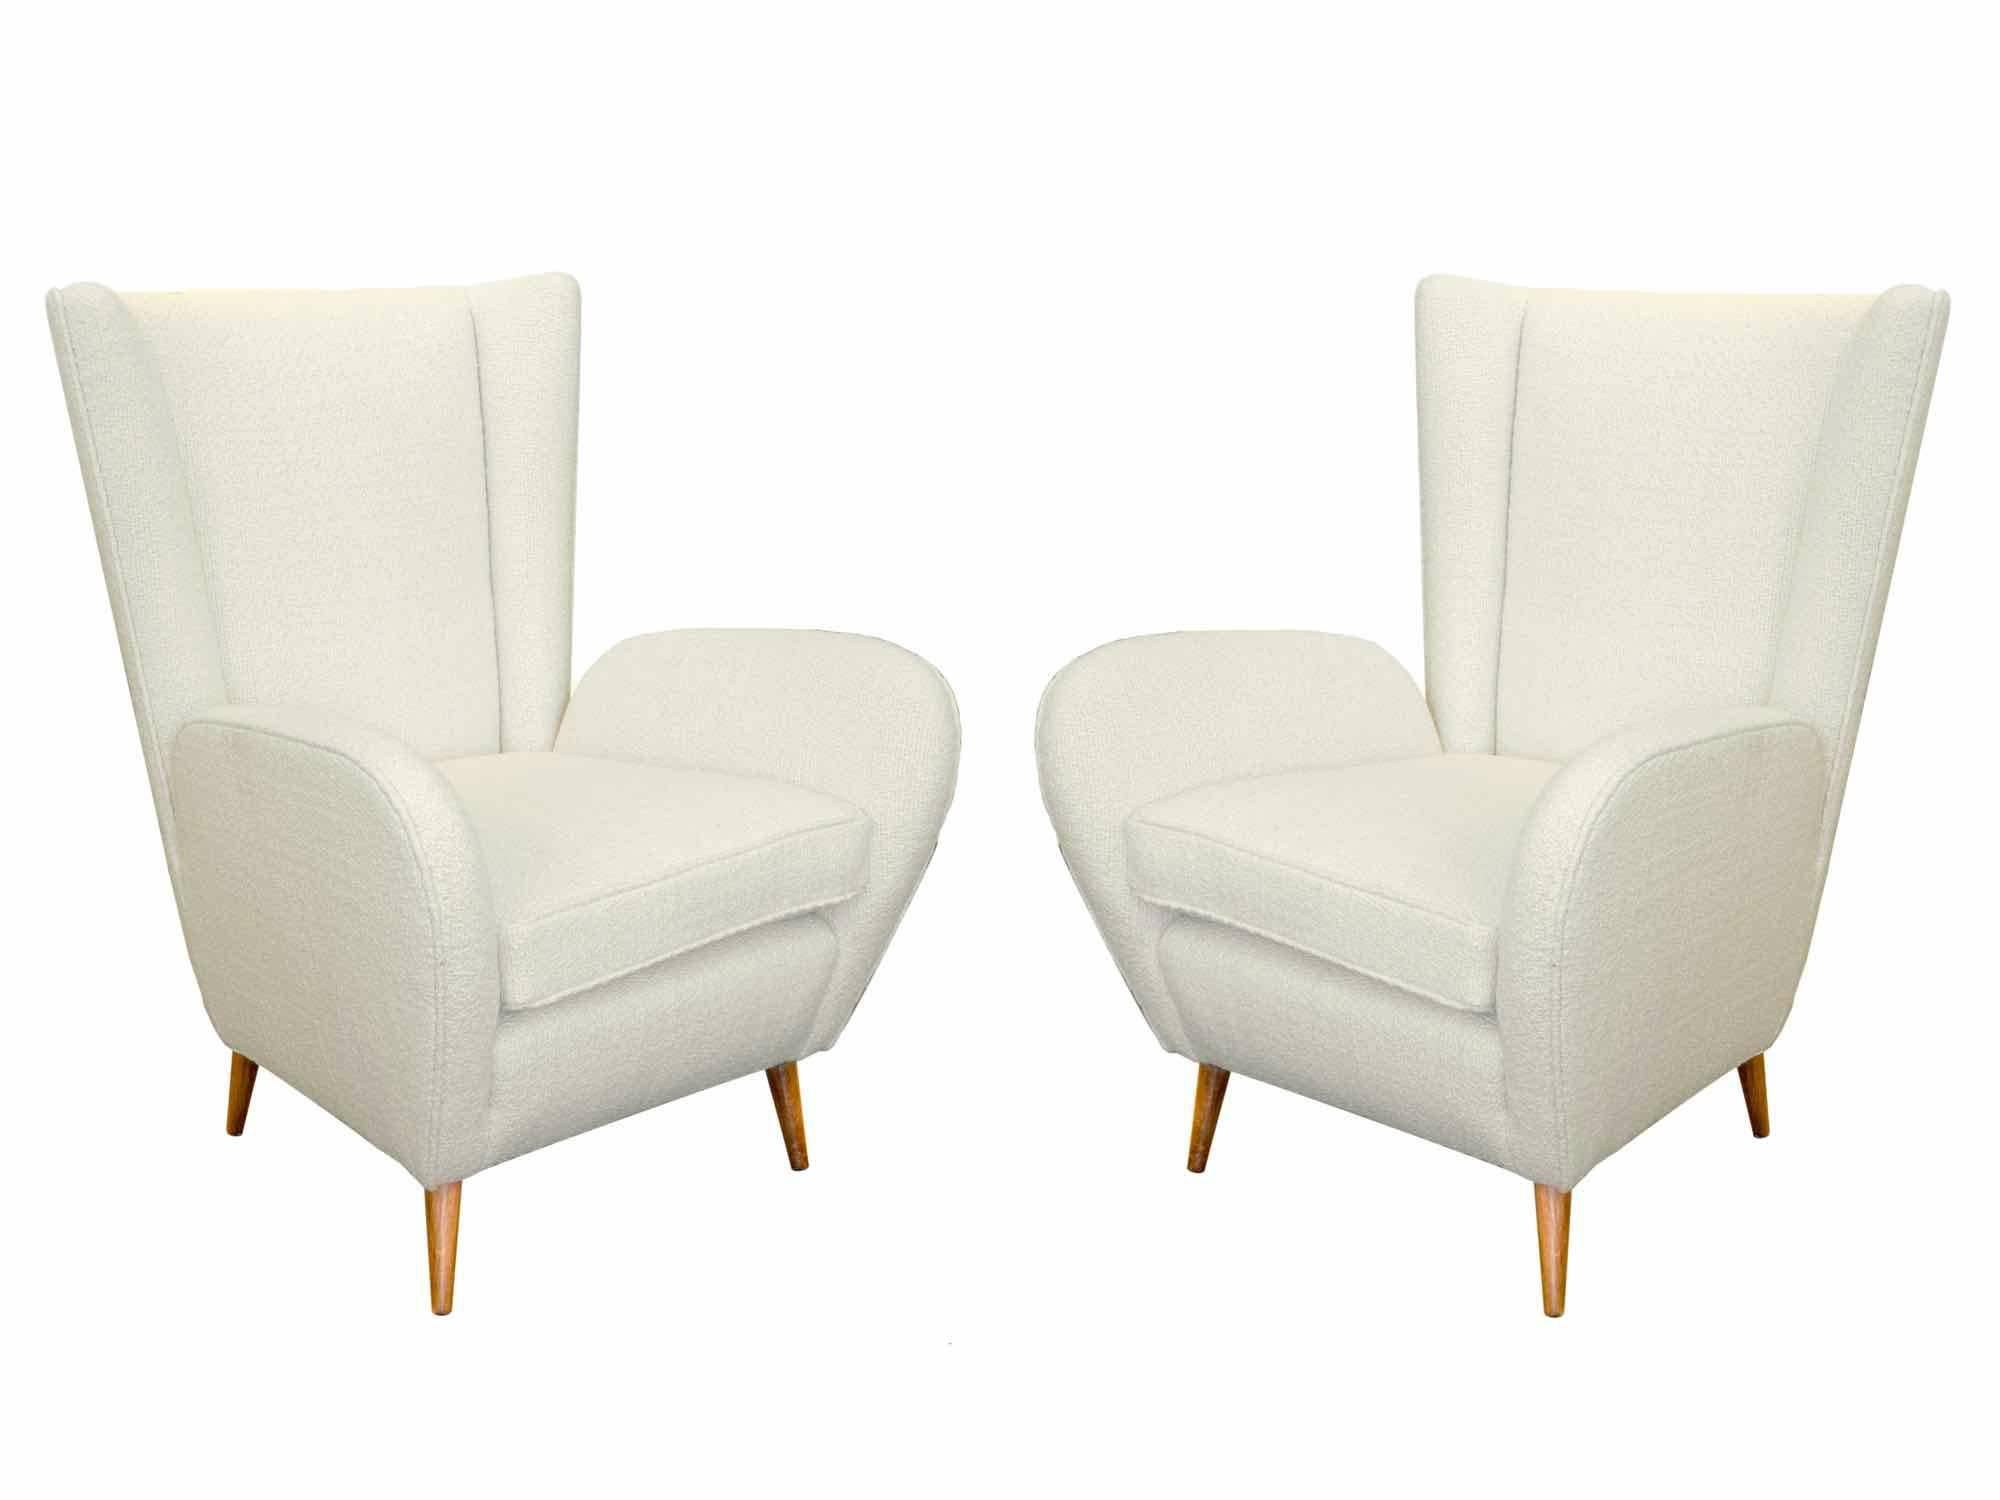 Paolo Buffa (1903-1970).

Pair of armchairs.

Bouclé fabric, wooden feet,

Italy, 1950. 

Measures: H 95 cm; W 70 cm; D 74 cm.